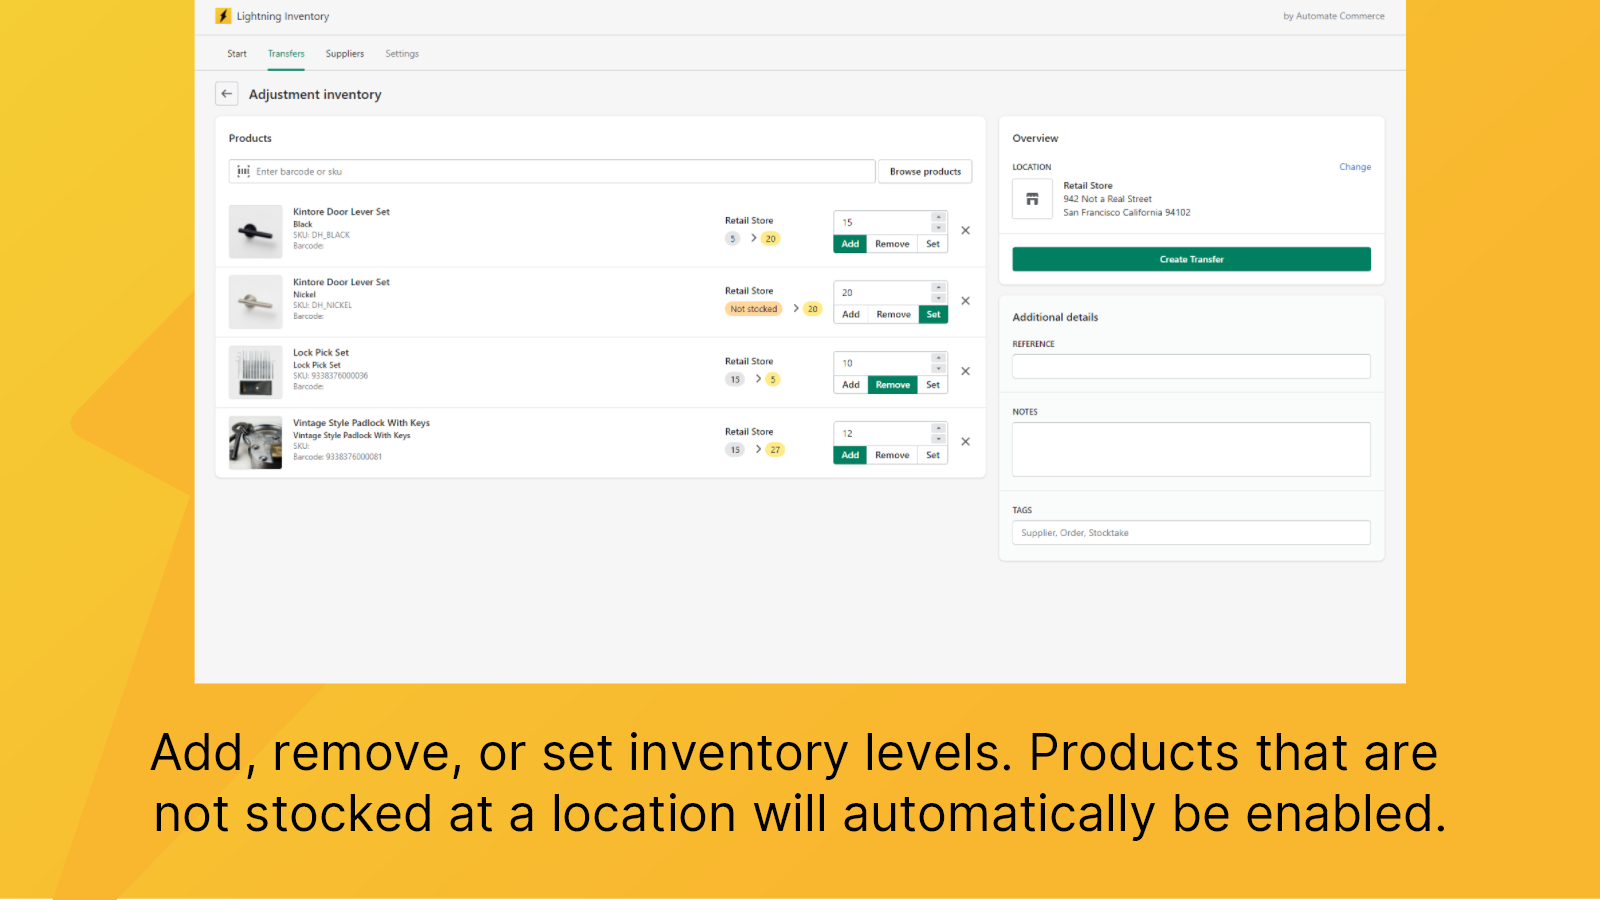 Lightning inventory - adjust inventory levels